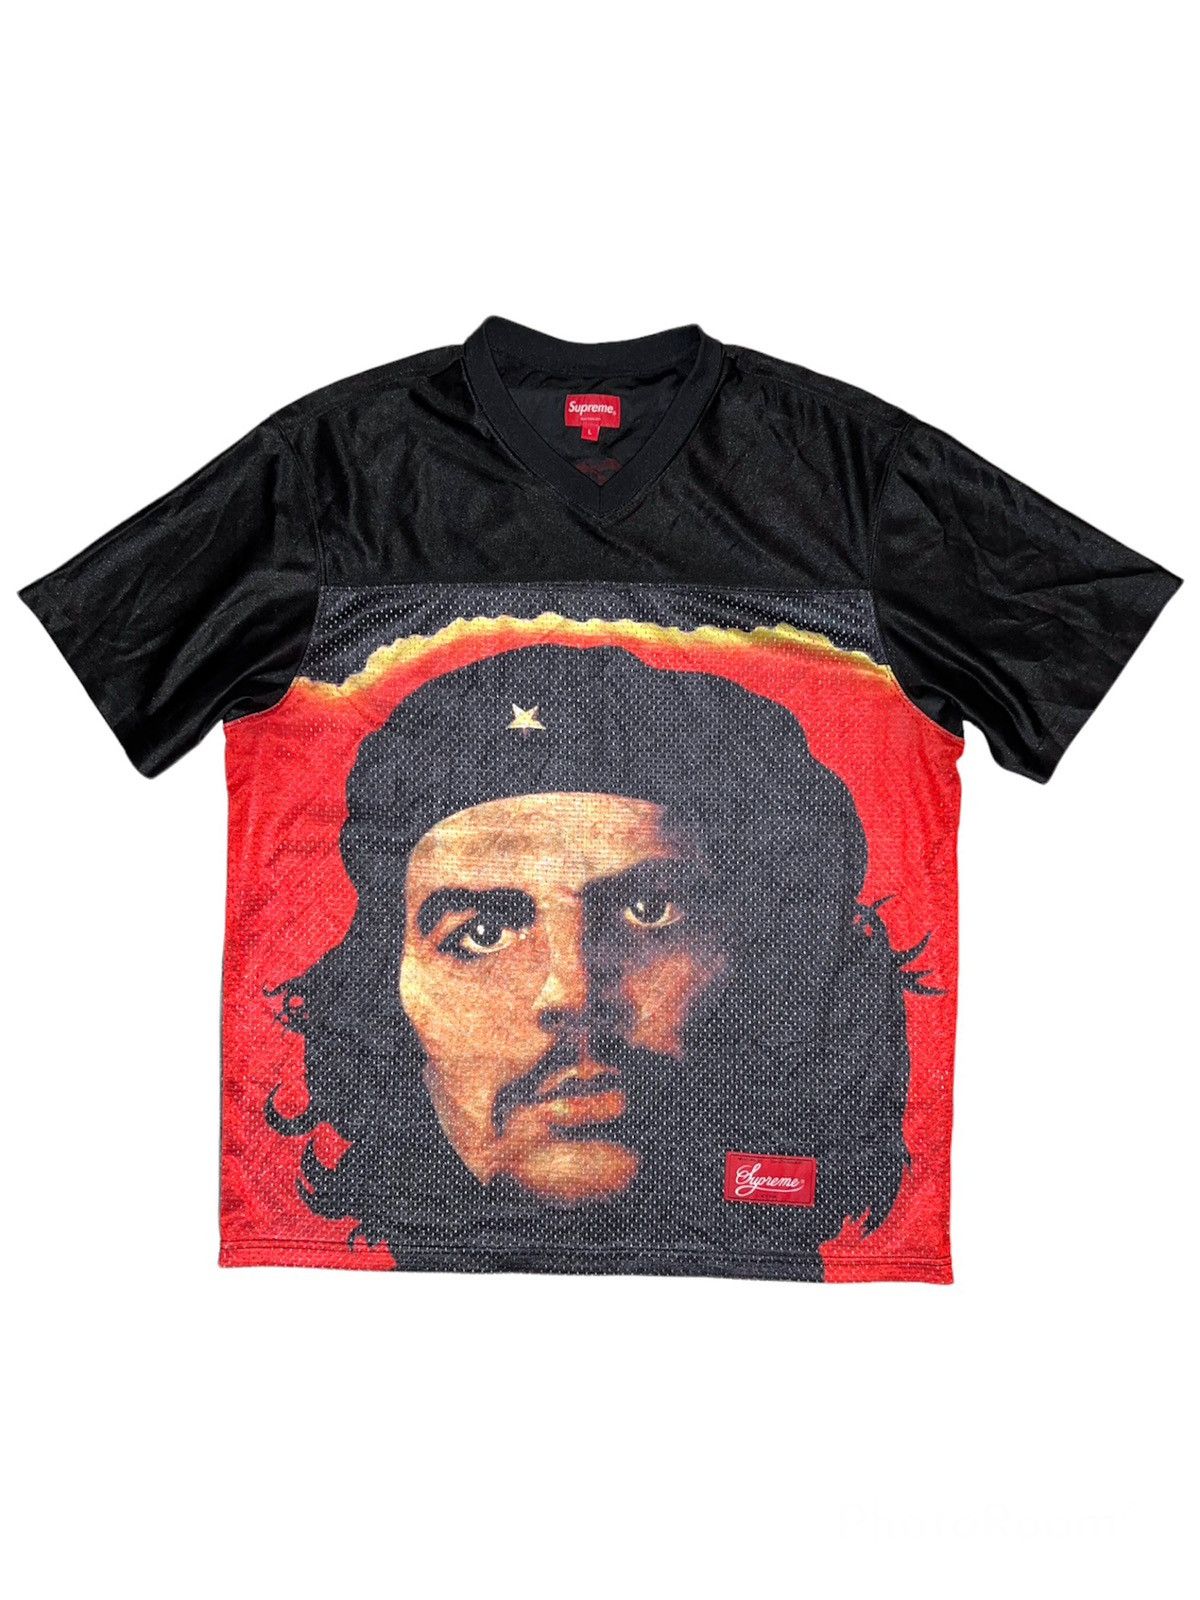 Supreme, Shirts, Che Guevara Supreme Jersey Size Large